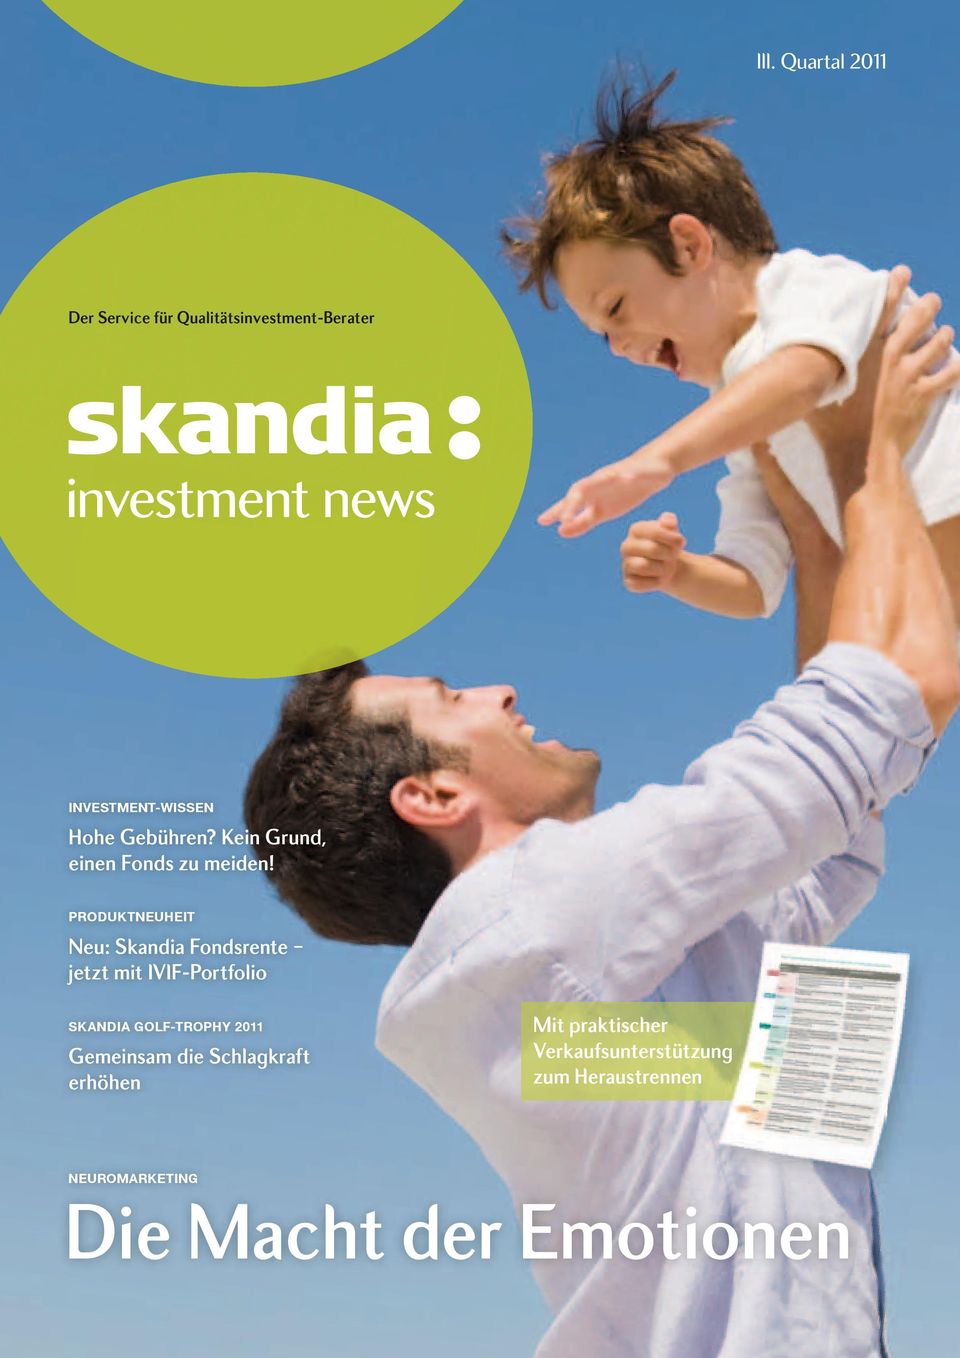 PRODUKTNEUHEIT Neu: Skandia Fondsrente jetzt mit IVIF Portfolio SKANDIA GOLF-TROPHY